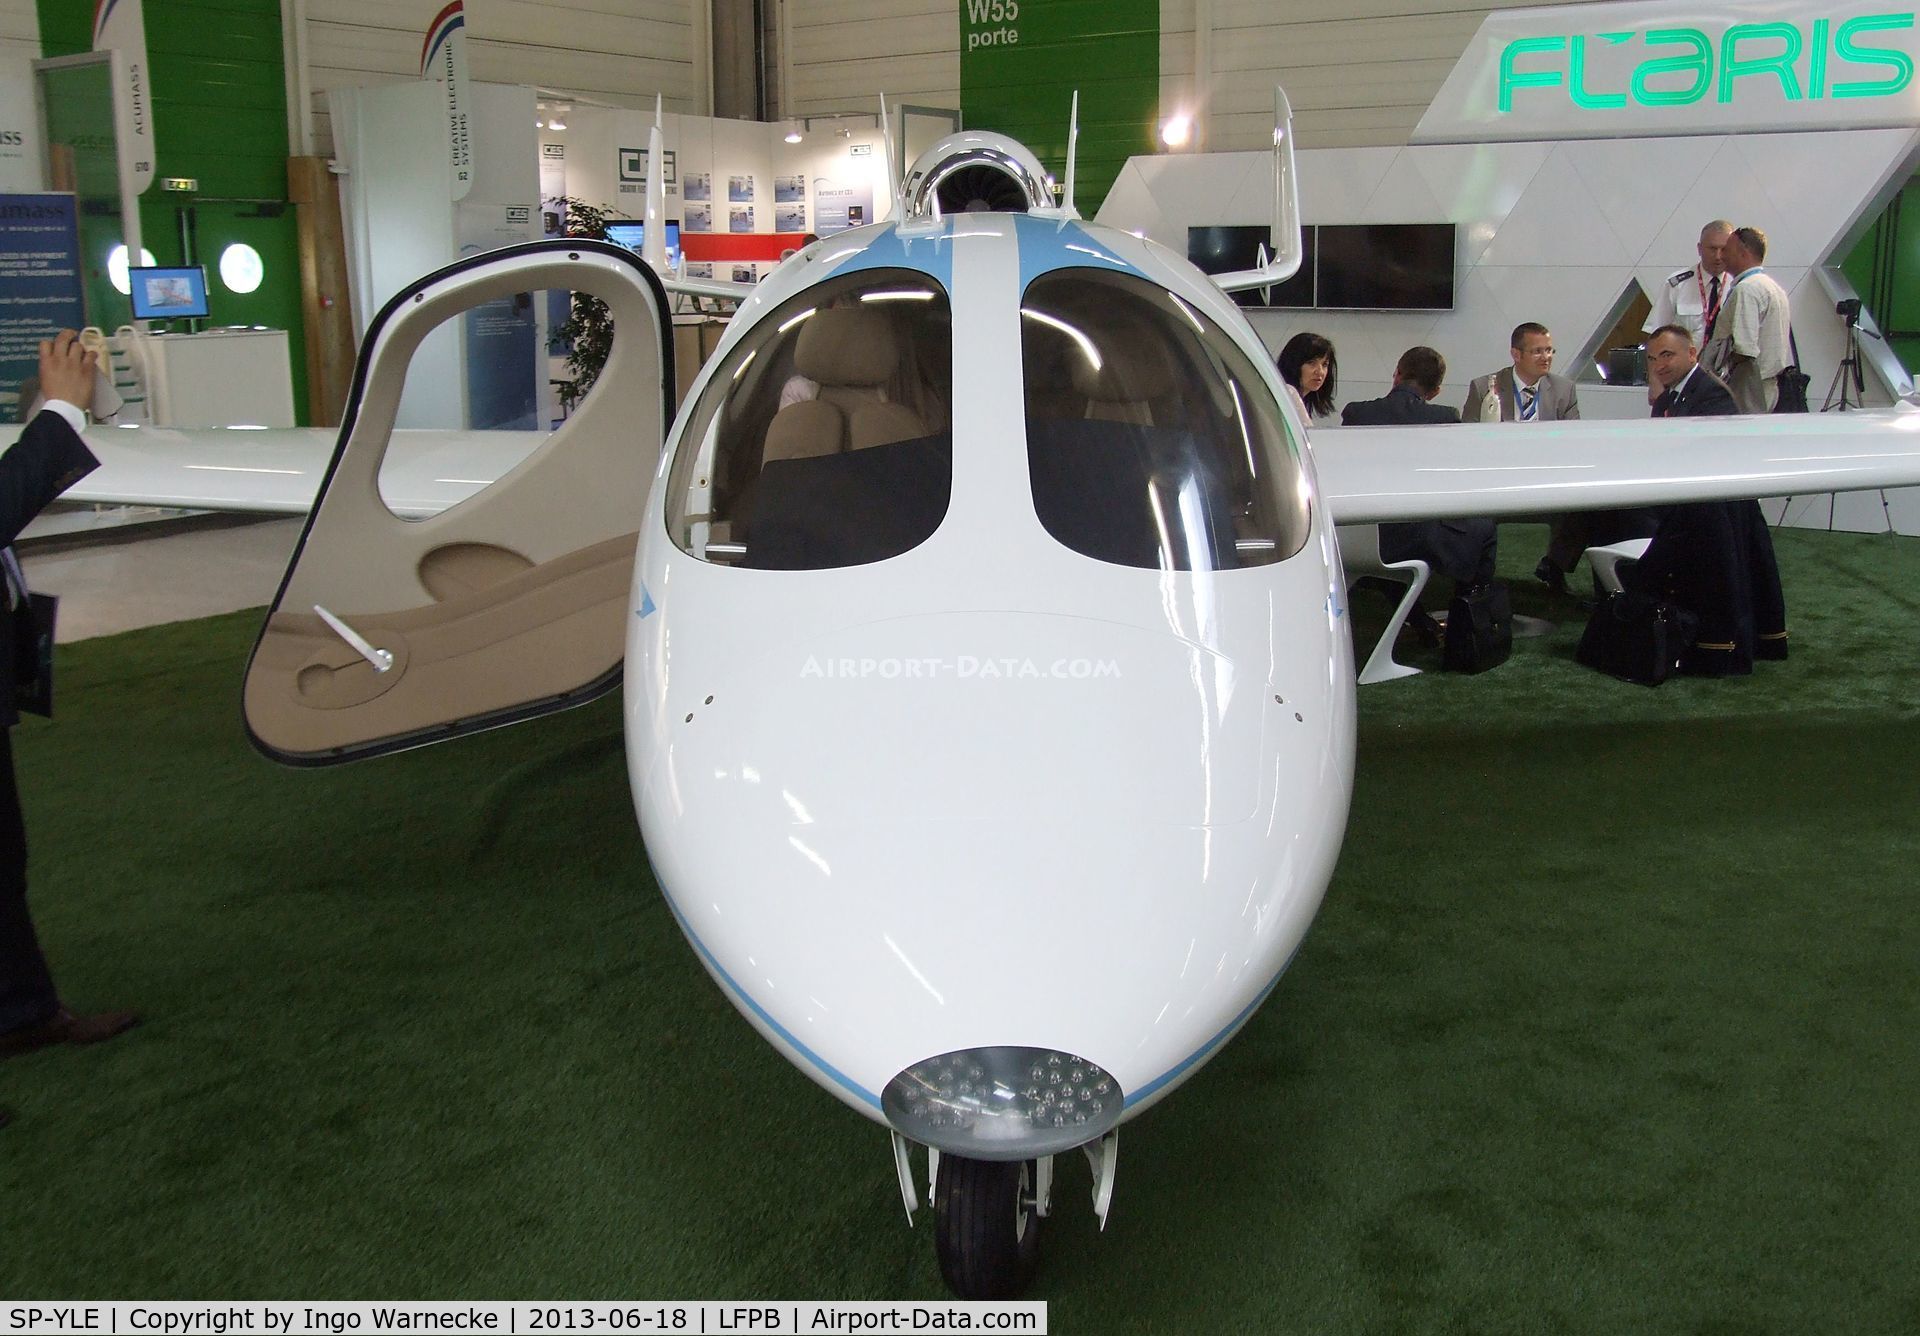 SP-YLE, 2013 Flaris LAR-1 C/N 01, Flaris LAR-1 (first flight planned for end of 2013) at the Aerosalon 2013, Paris